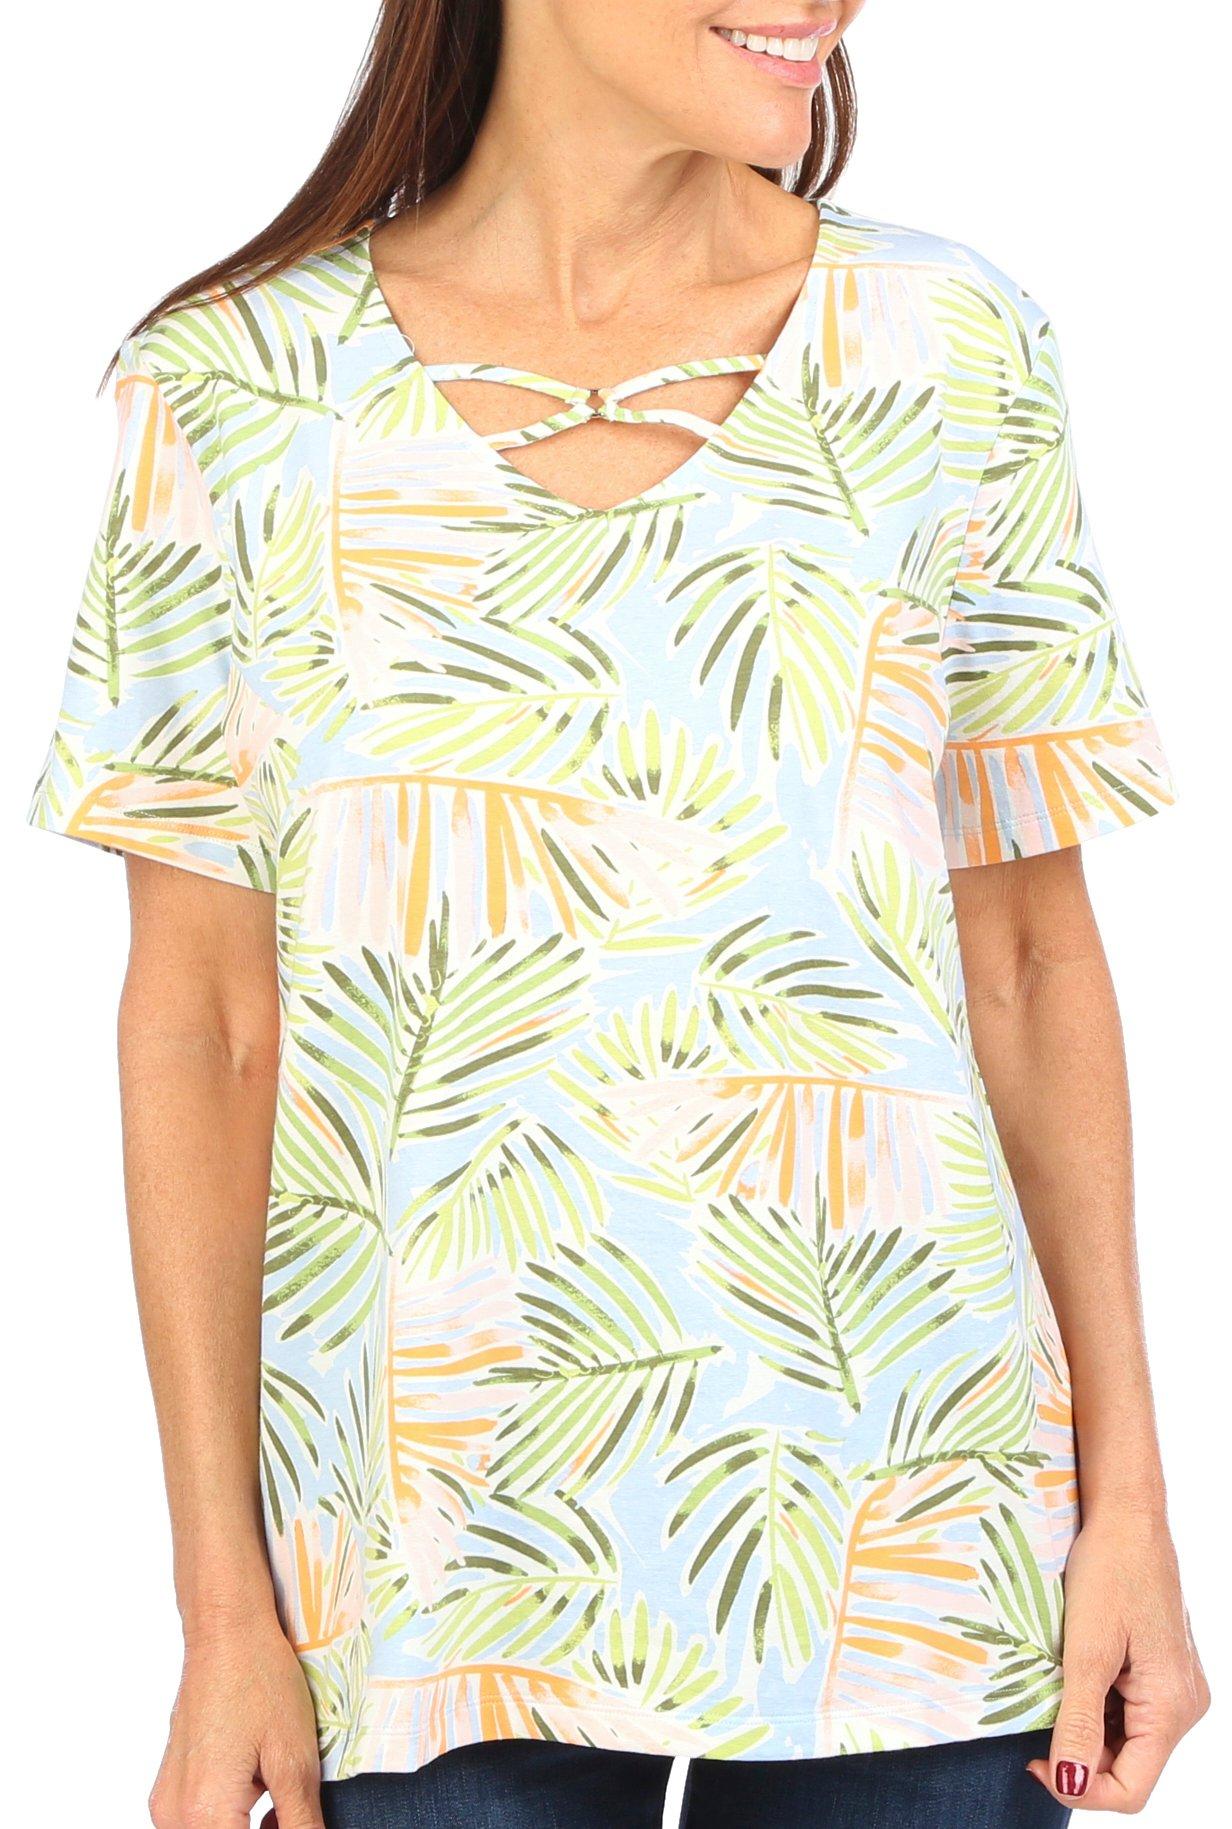 Coral Bay Womens Print O-Ring Crisscross Short Sleeve Top